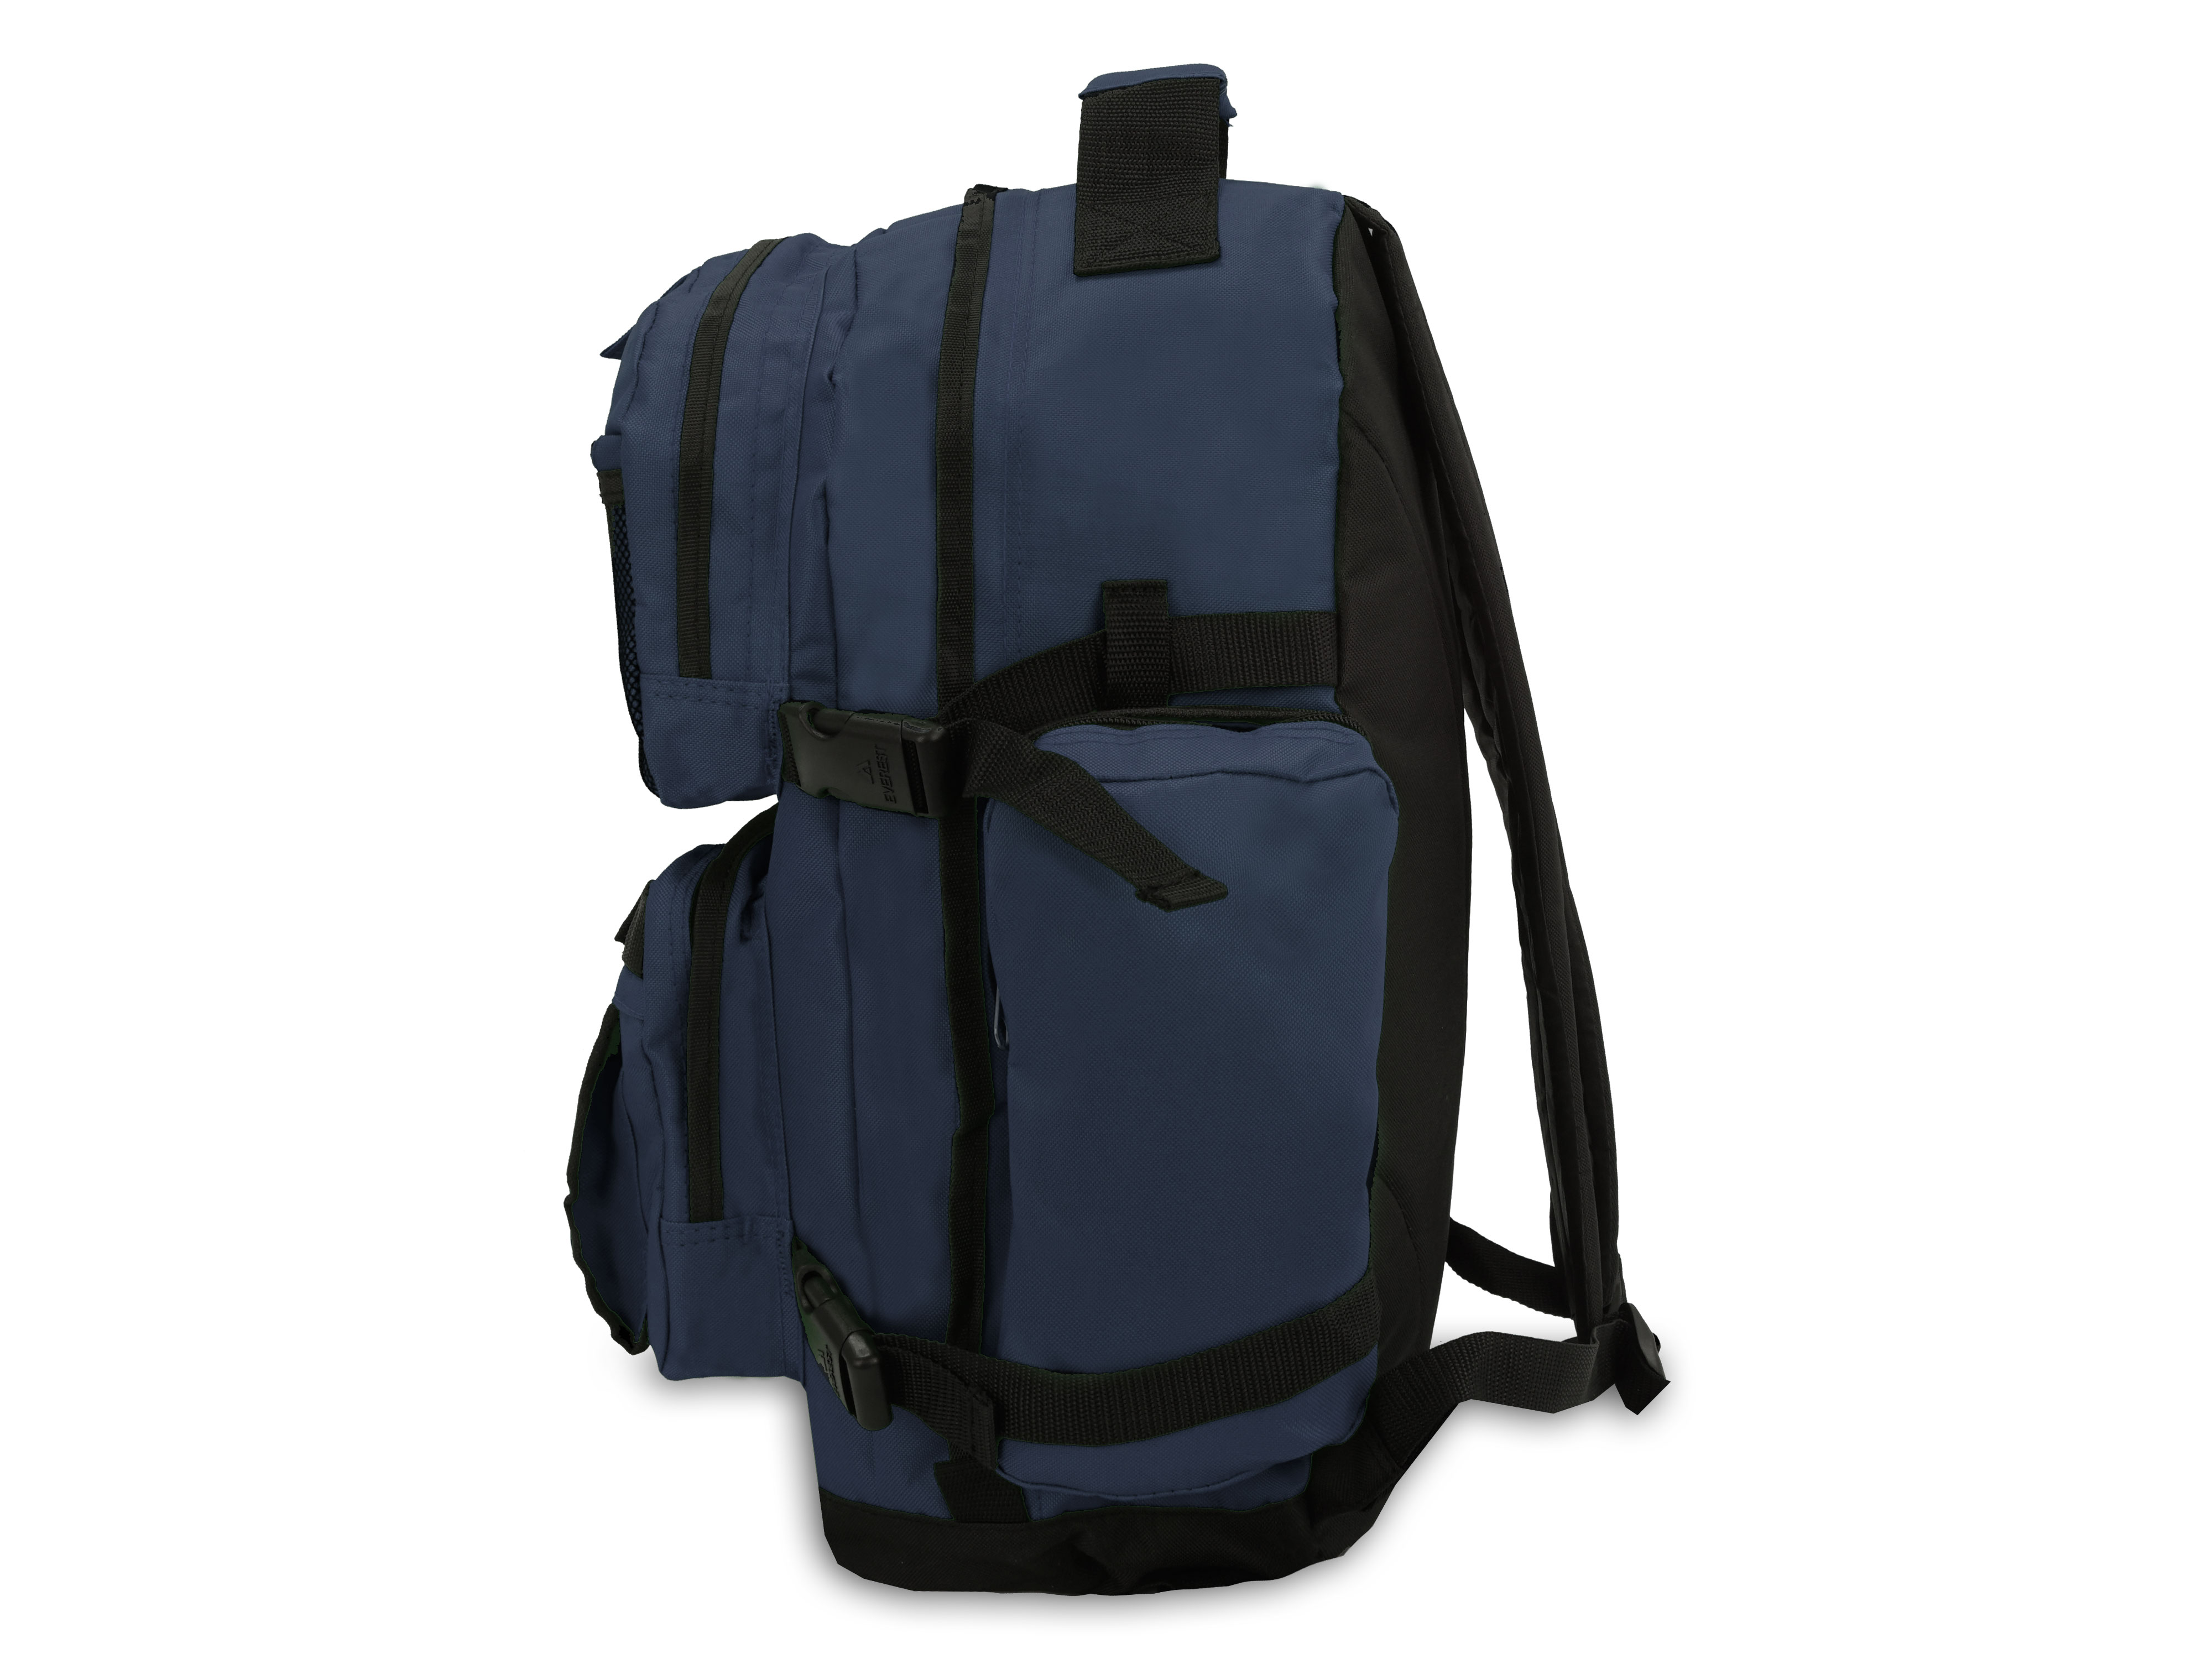 Everest Unisex Oversize Deluxe Backpack Navy Blue Black - image 4 of 5